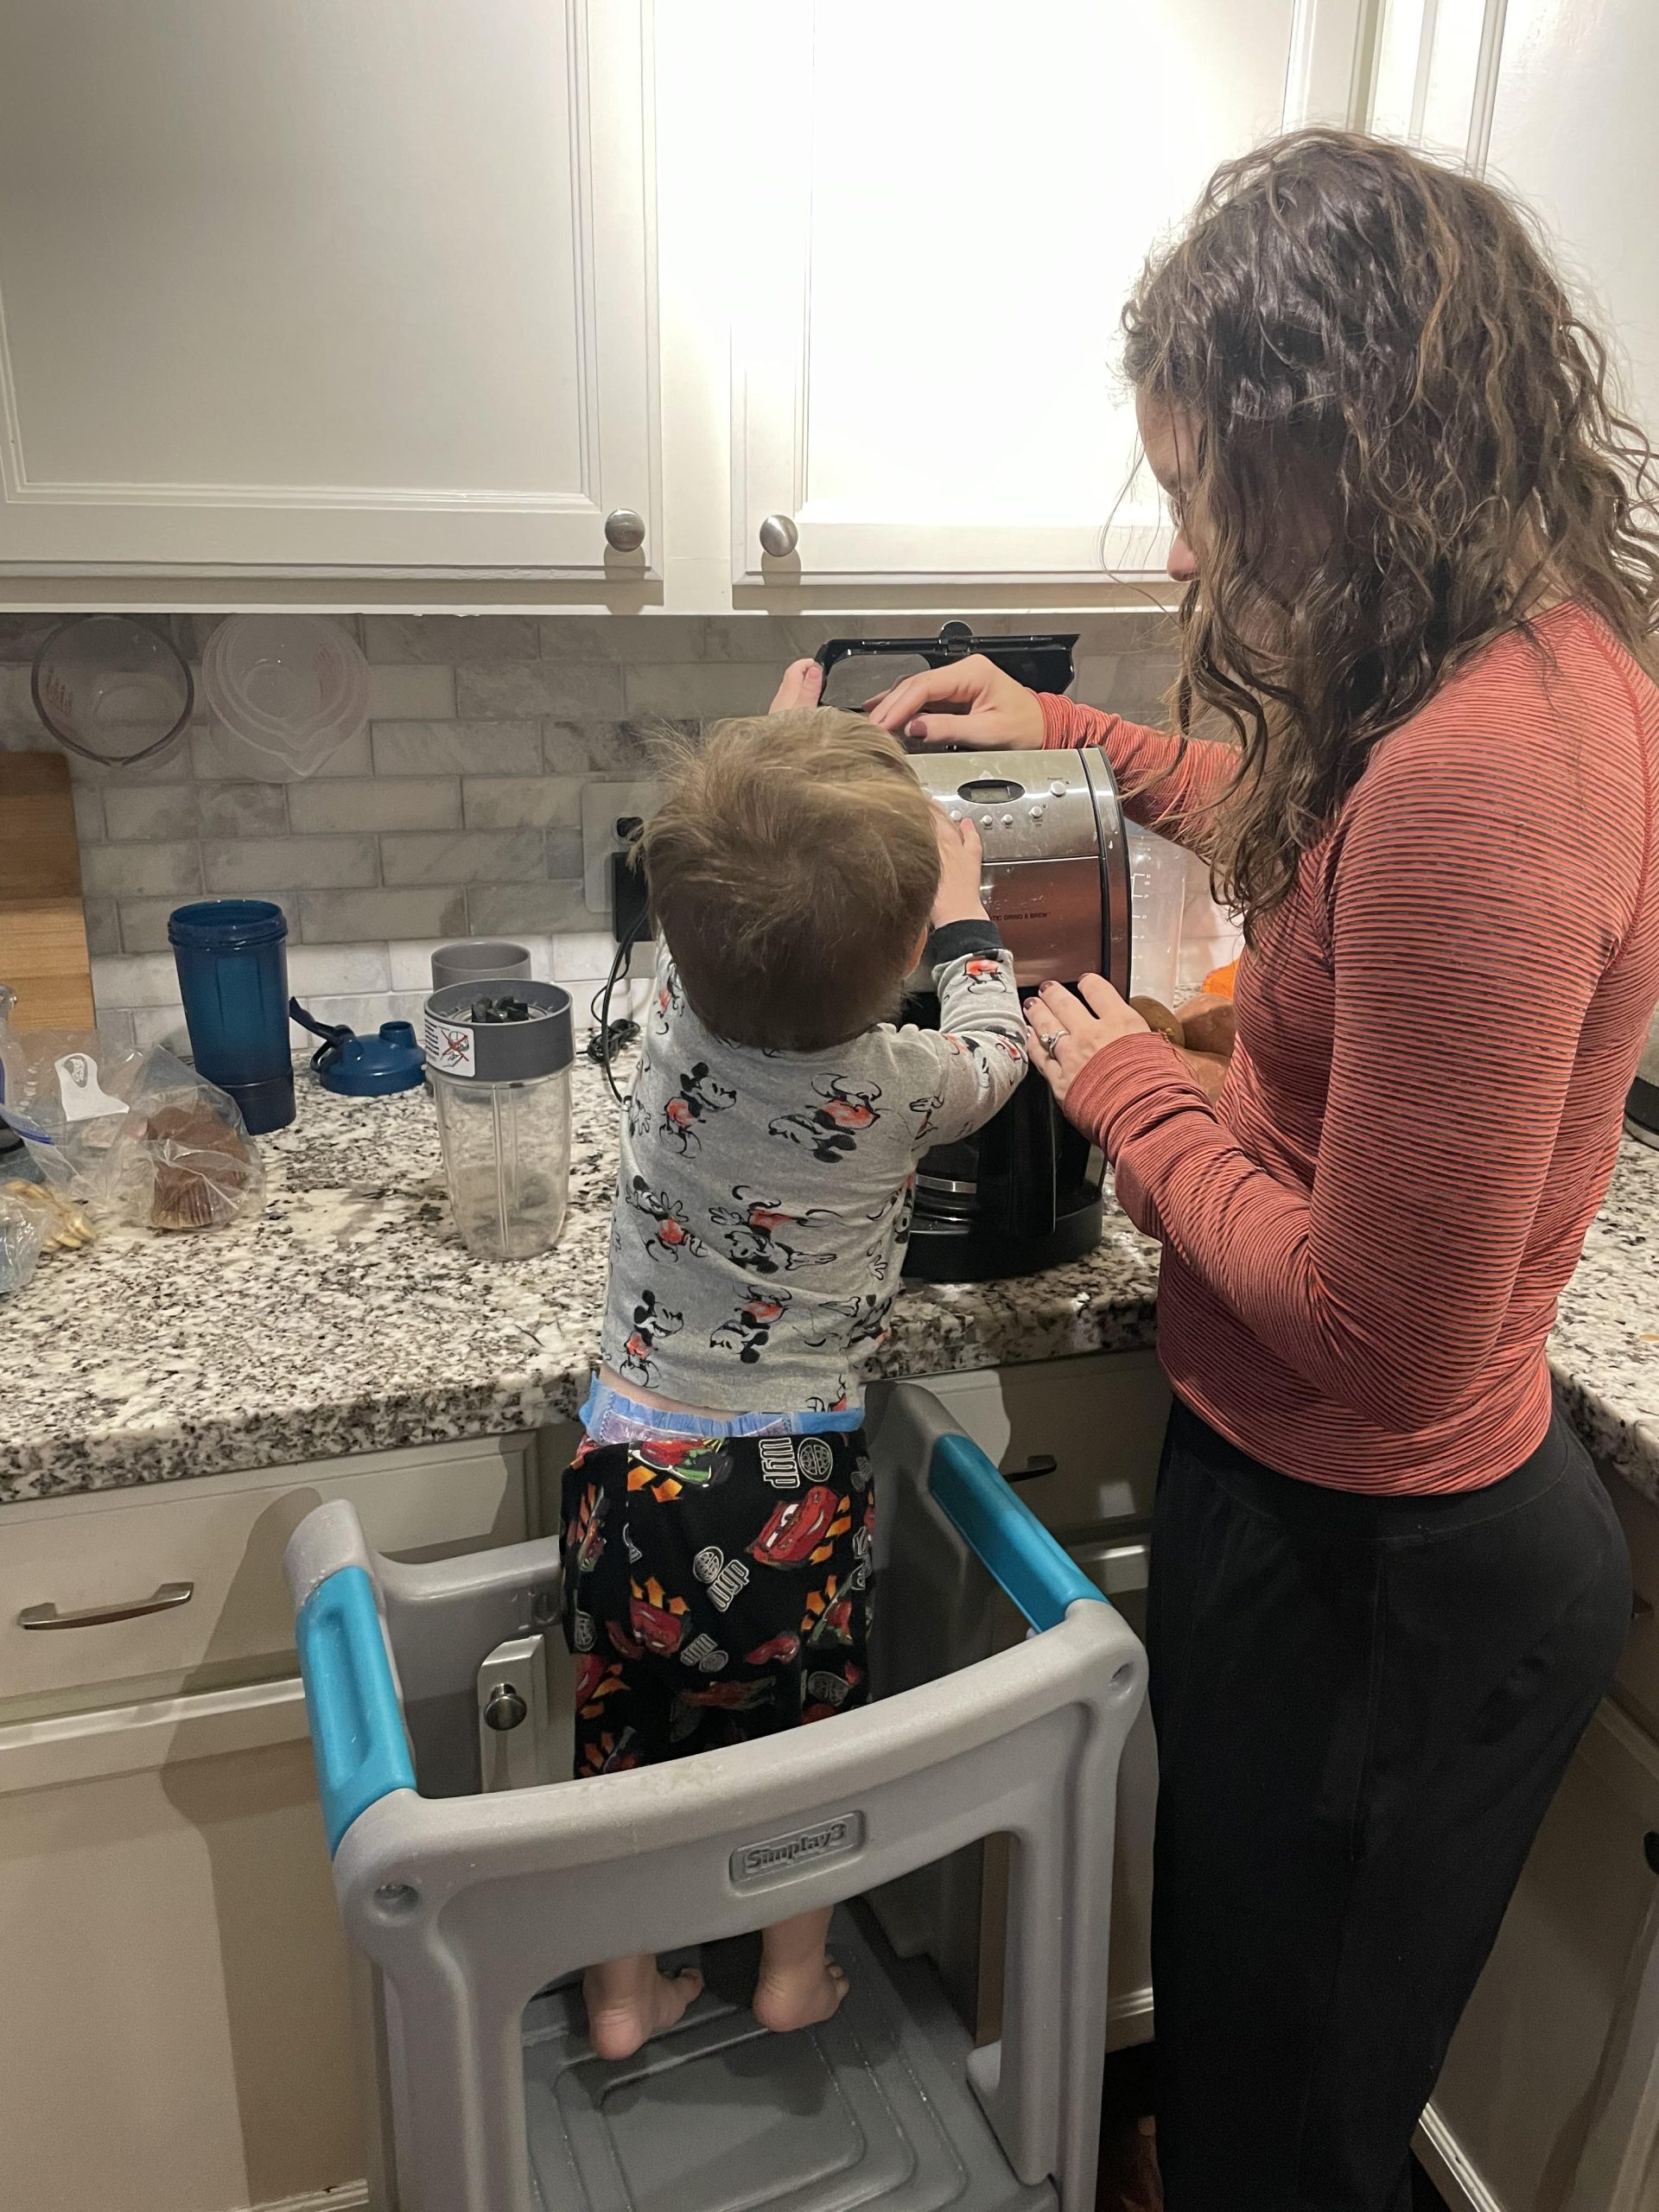 Leo helping Mom make coffee